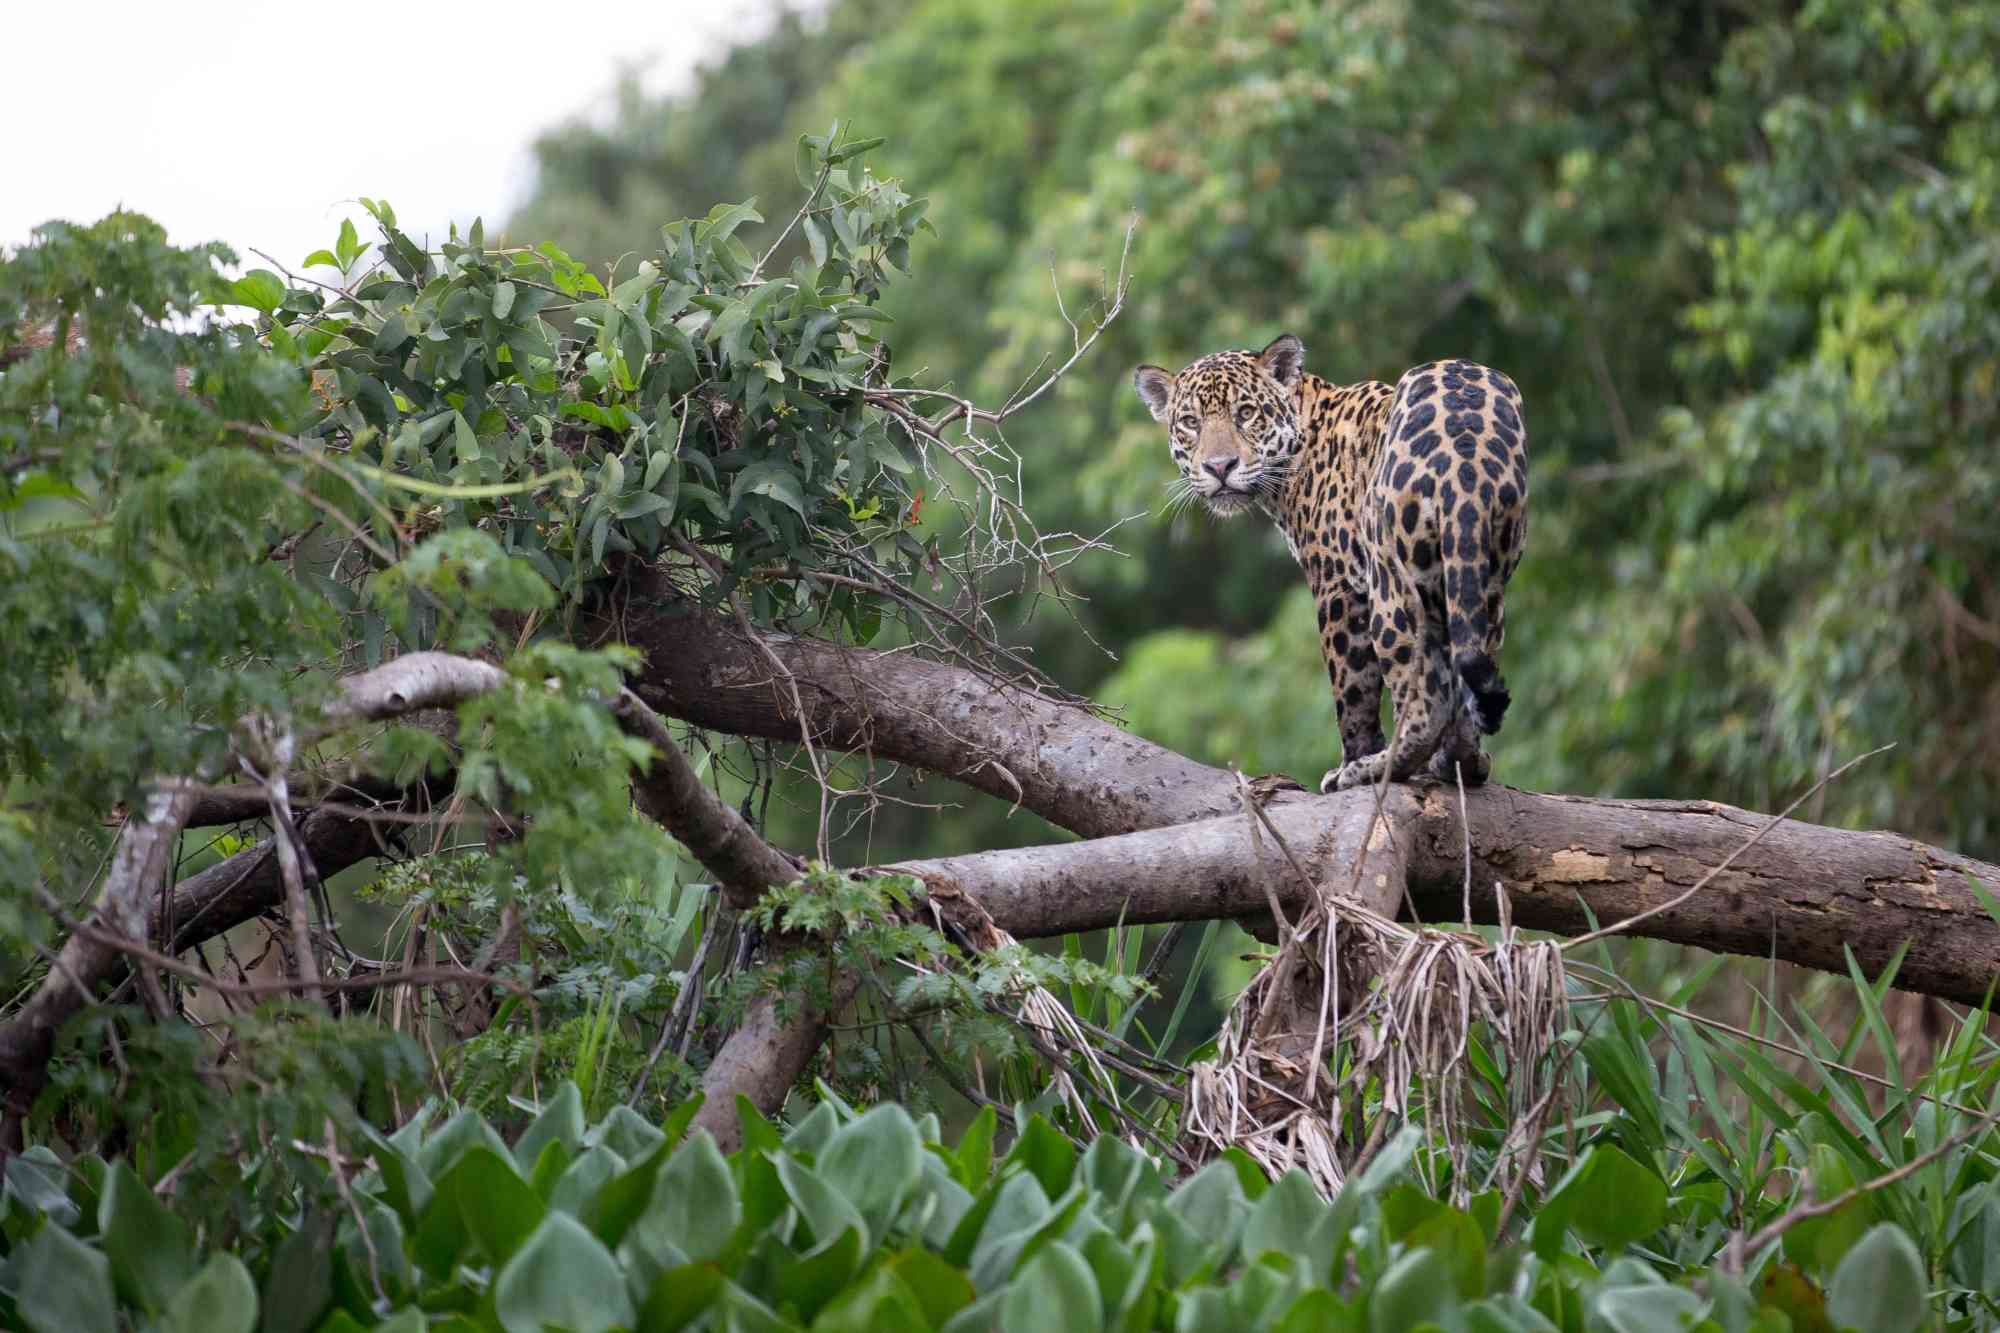 Jaguar on a branch in forest, Brazil